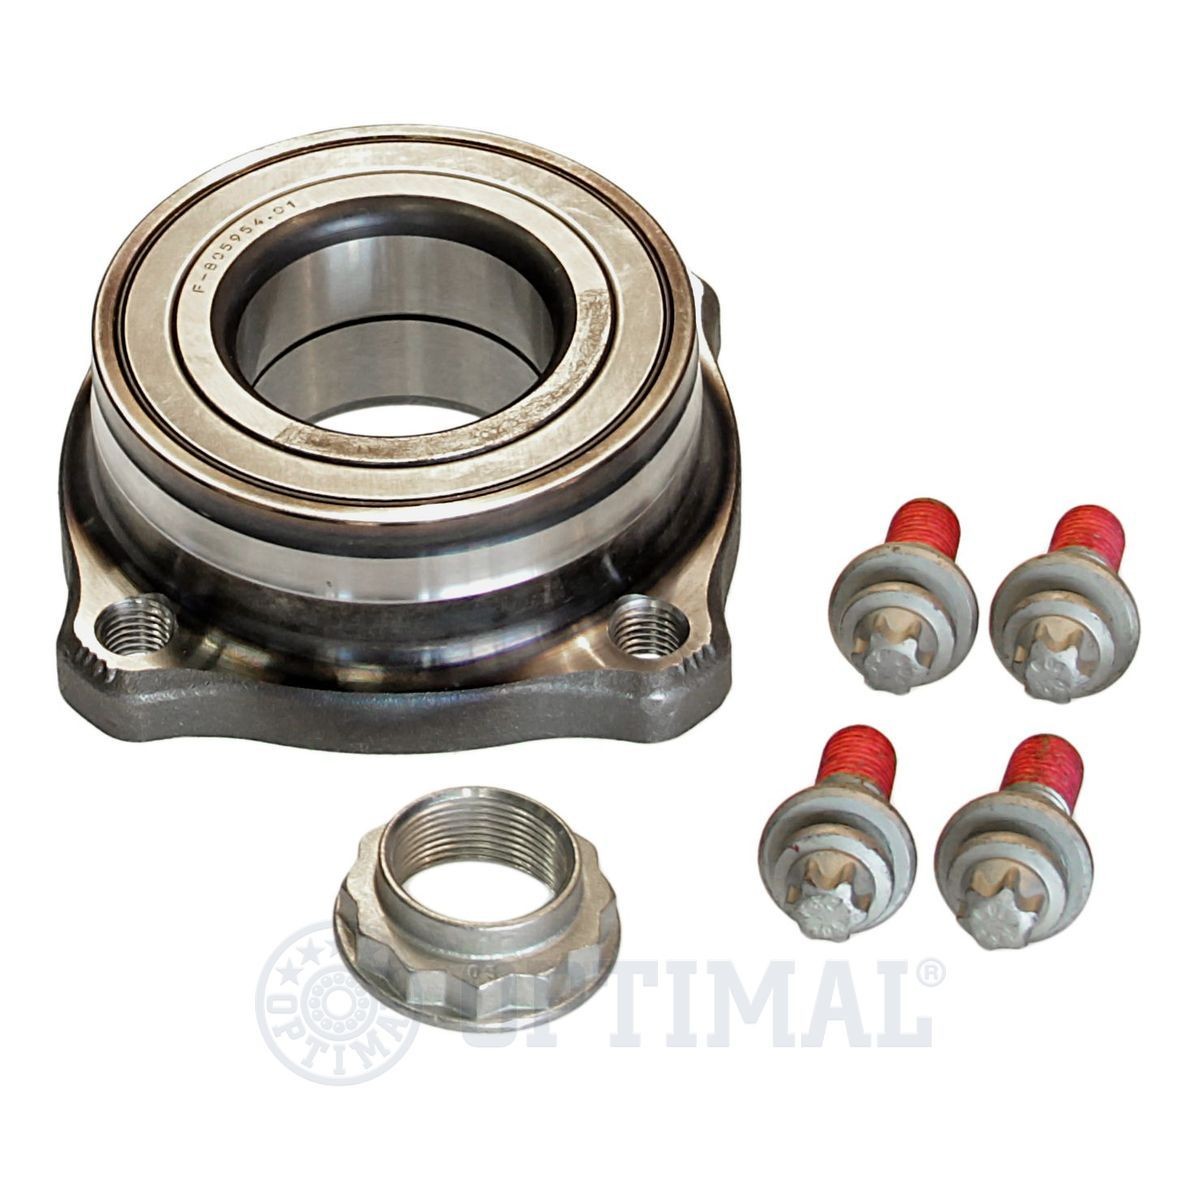 OPTIMAL 502502 Wheel bearing kit with integrated magnetic sensor ring, 92 mm